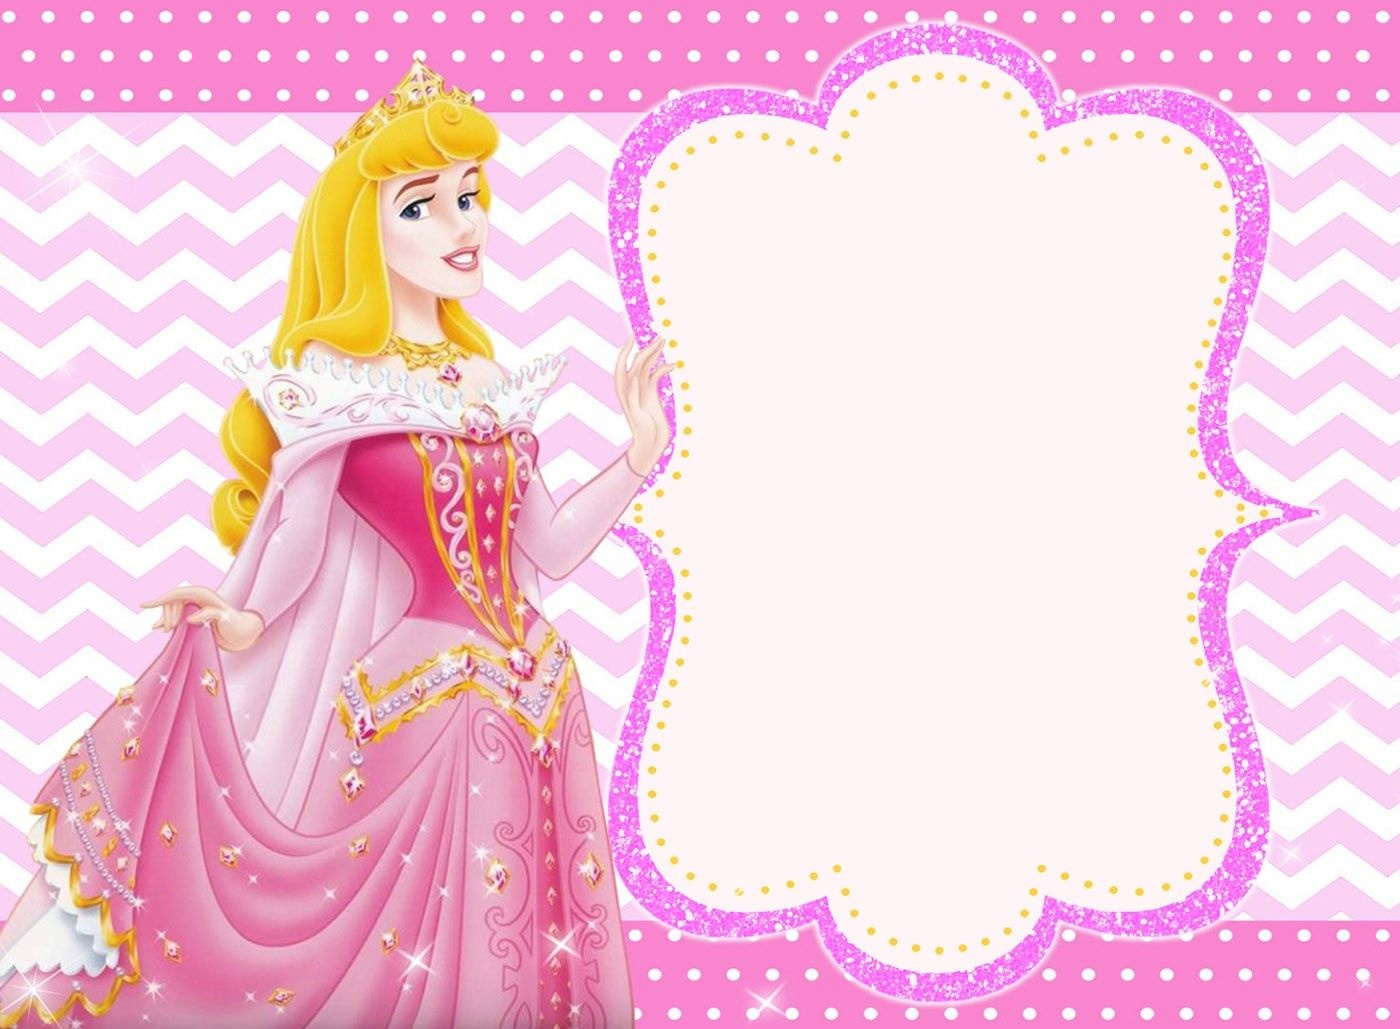 Free Printable Princess Invitation Templates | Invitations - Free Printable Princess Invitation Cards